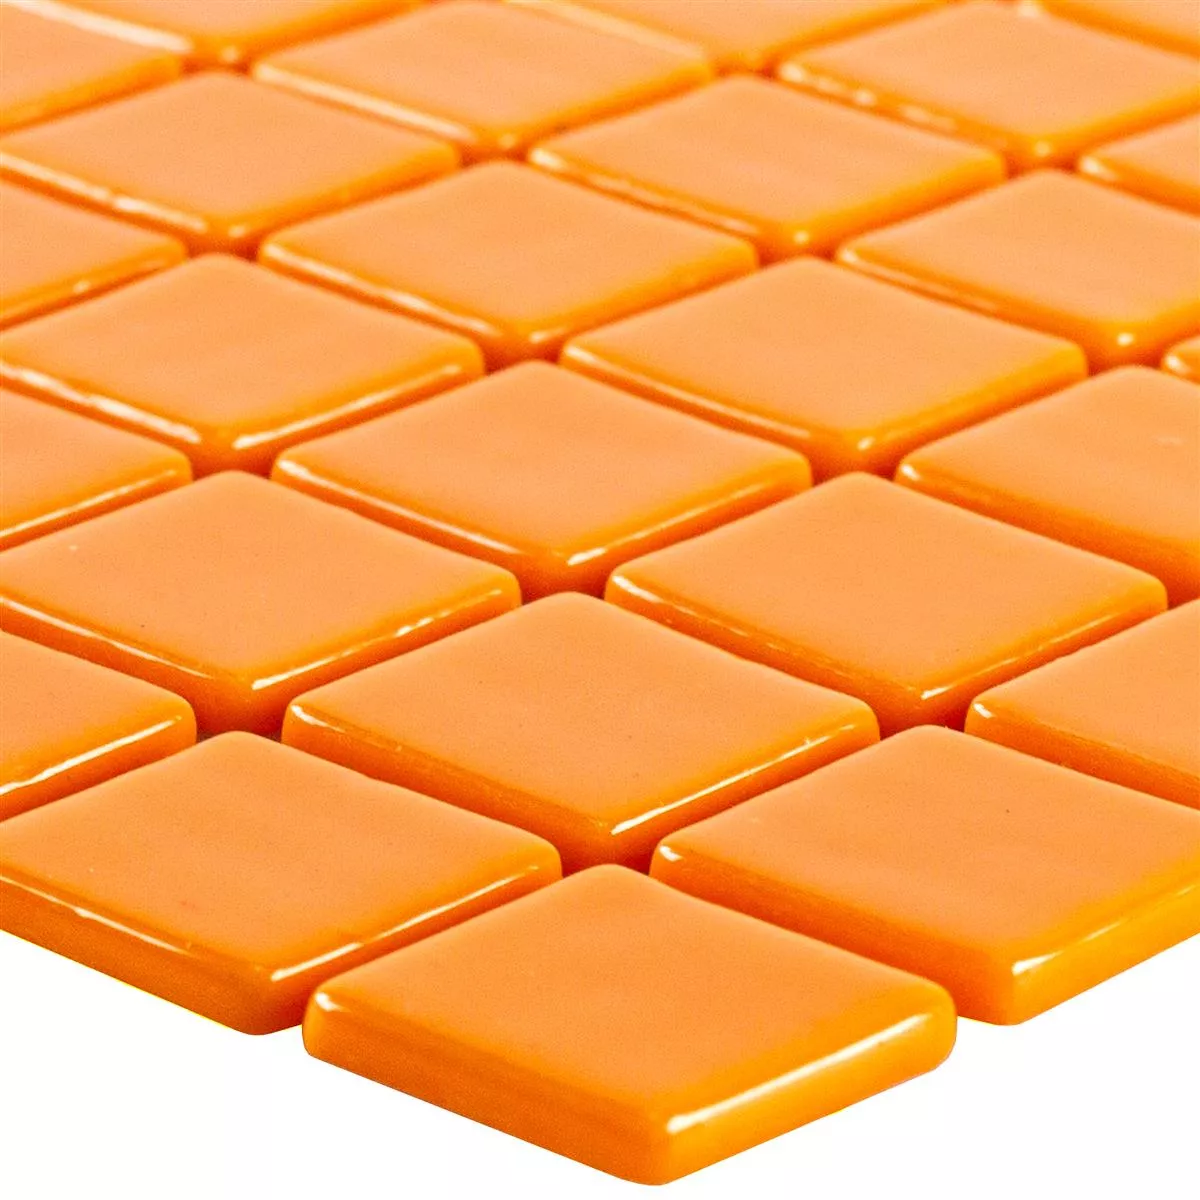 Sample Glass Pool Swimmingpool Mosaic Pixley Orange